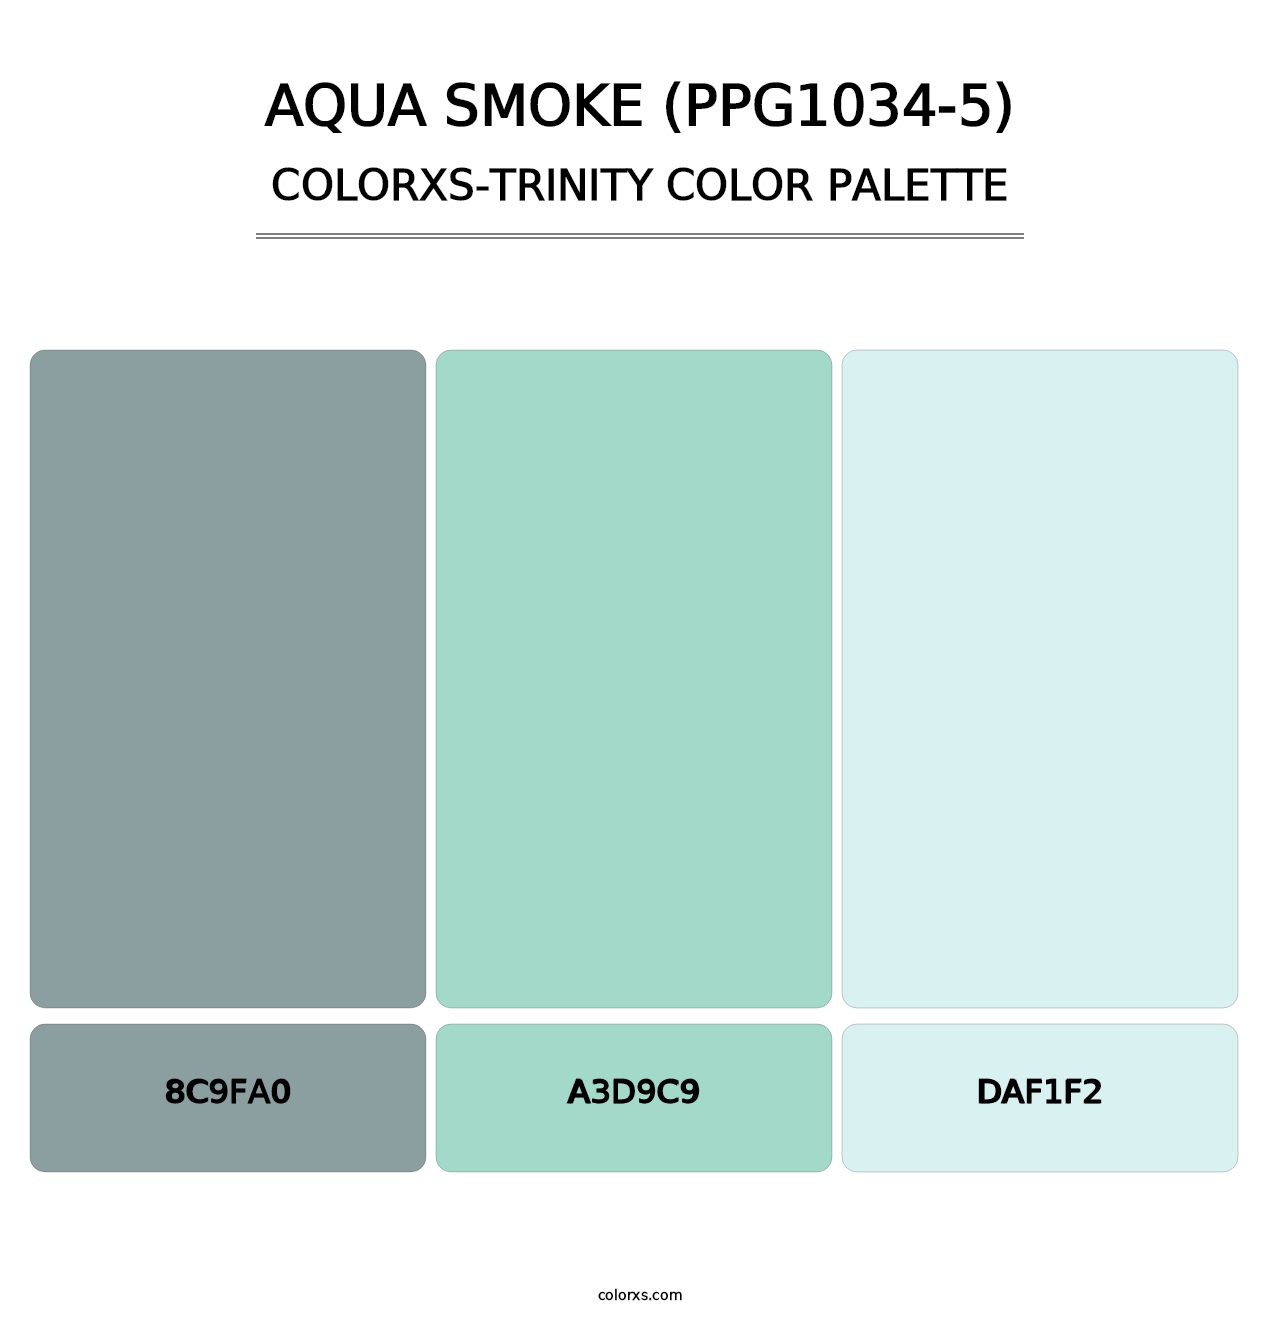 Aqua Smoke (PPG1034-5) - Colorxs Trinity Palette